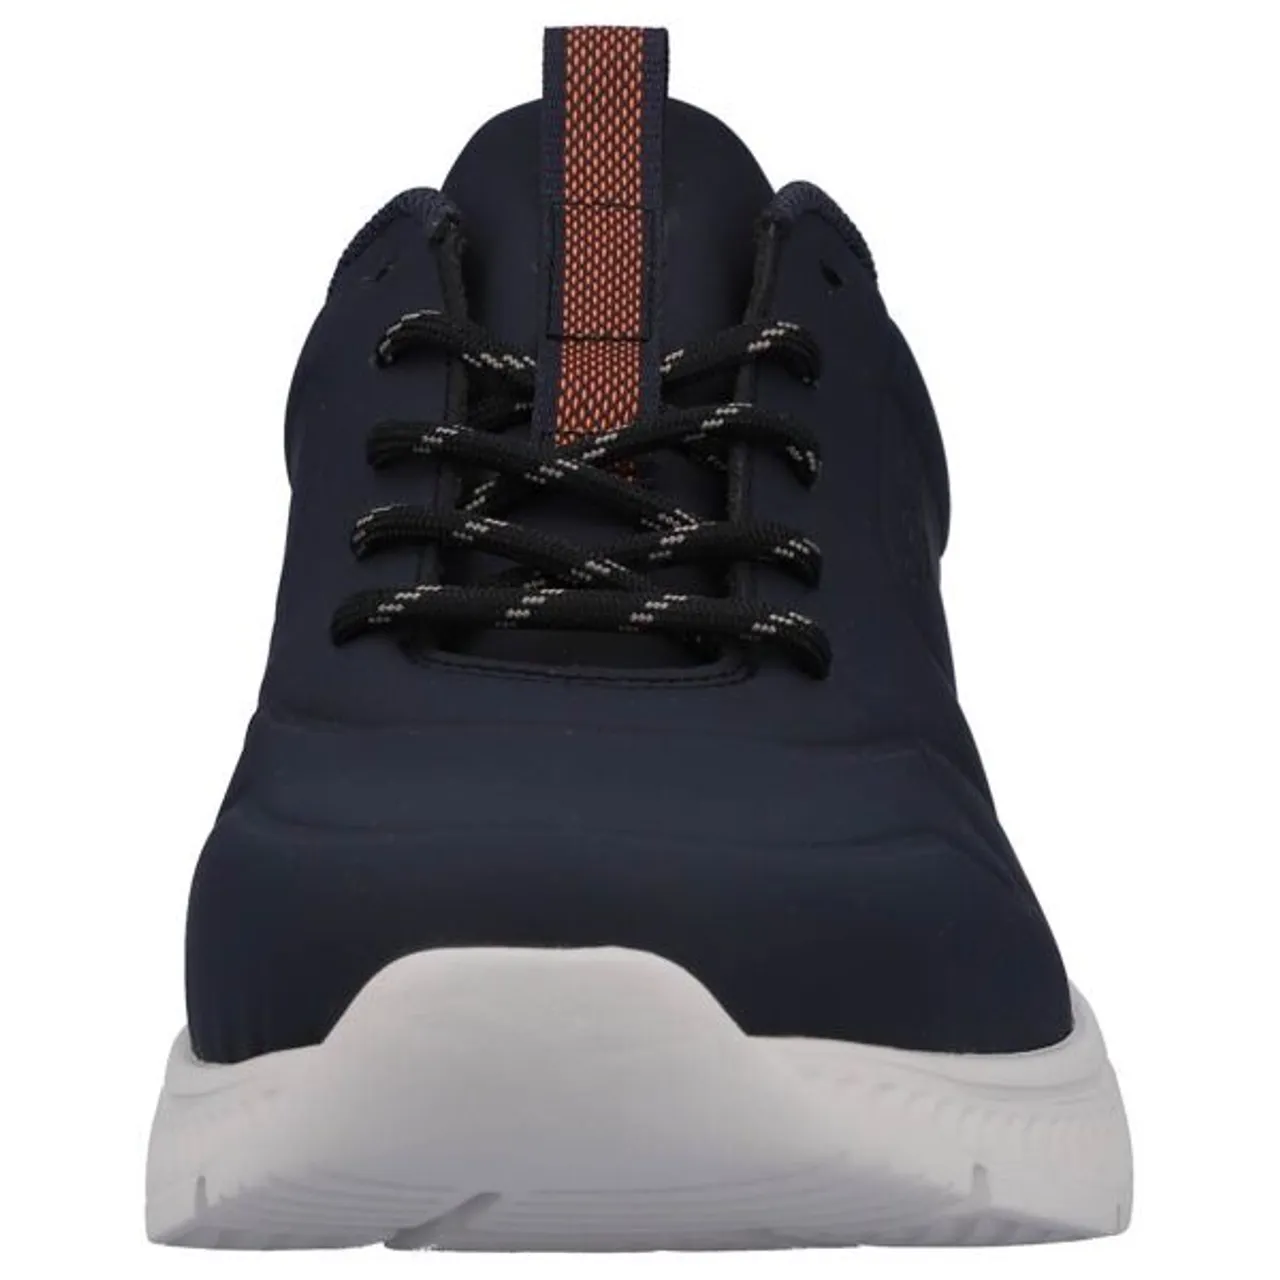 Sneaker RIEKER Gr. 41, blau (dunkelblau) Herren Schuhe Schnürhalbschuhe